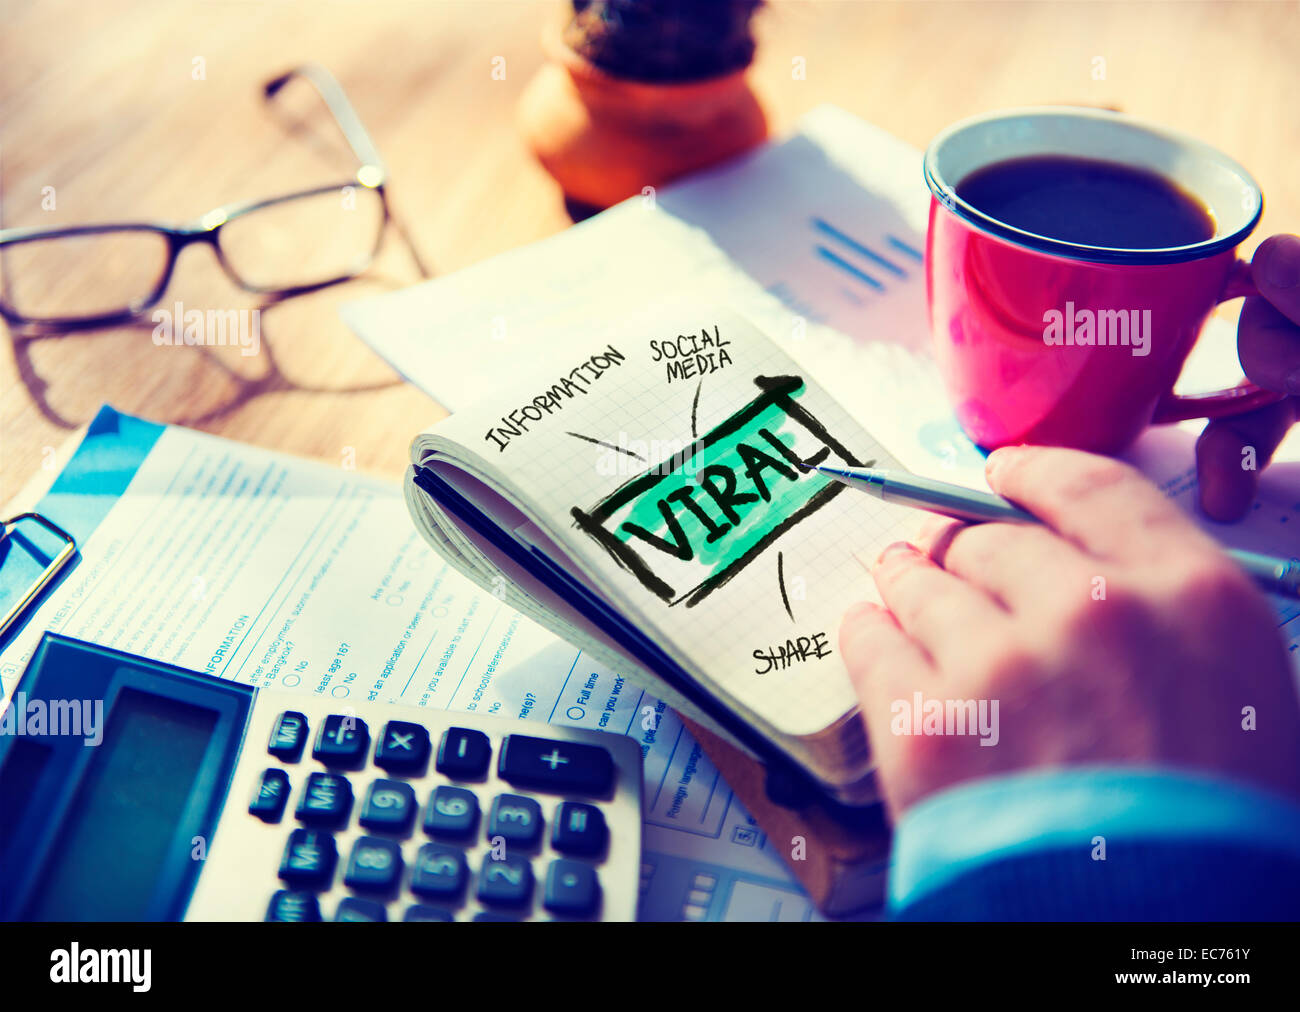 Viral Accounting Sharing Working at Home Writing Concept Stock Photo